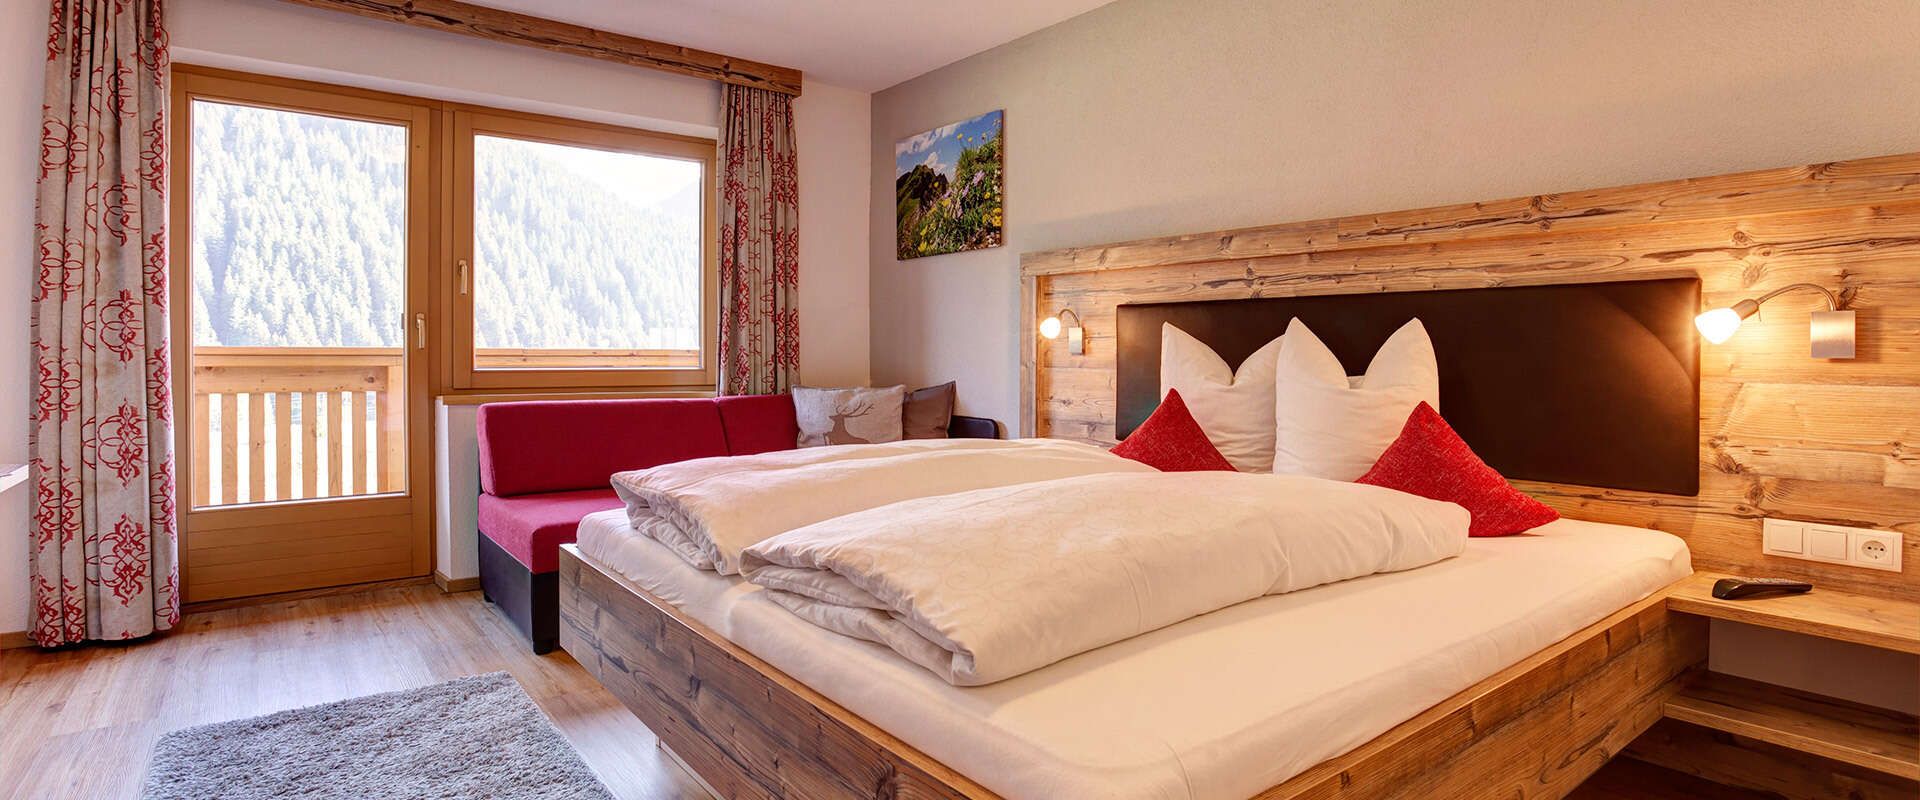 Rooms in the Pension Roman in St Anton am Arlberg